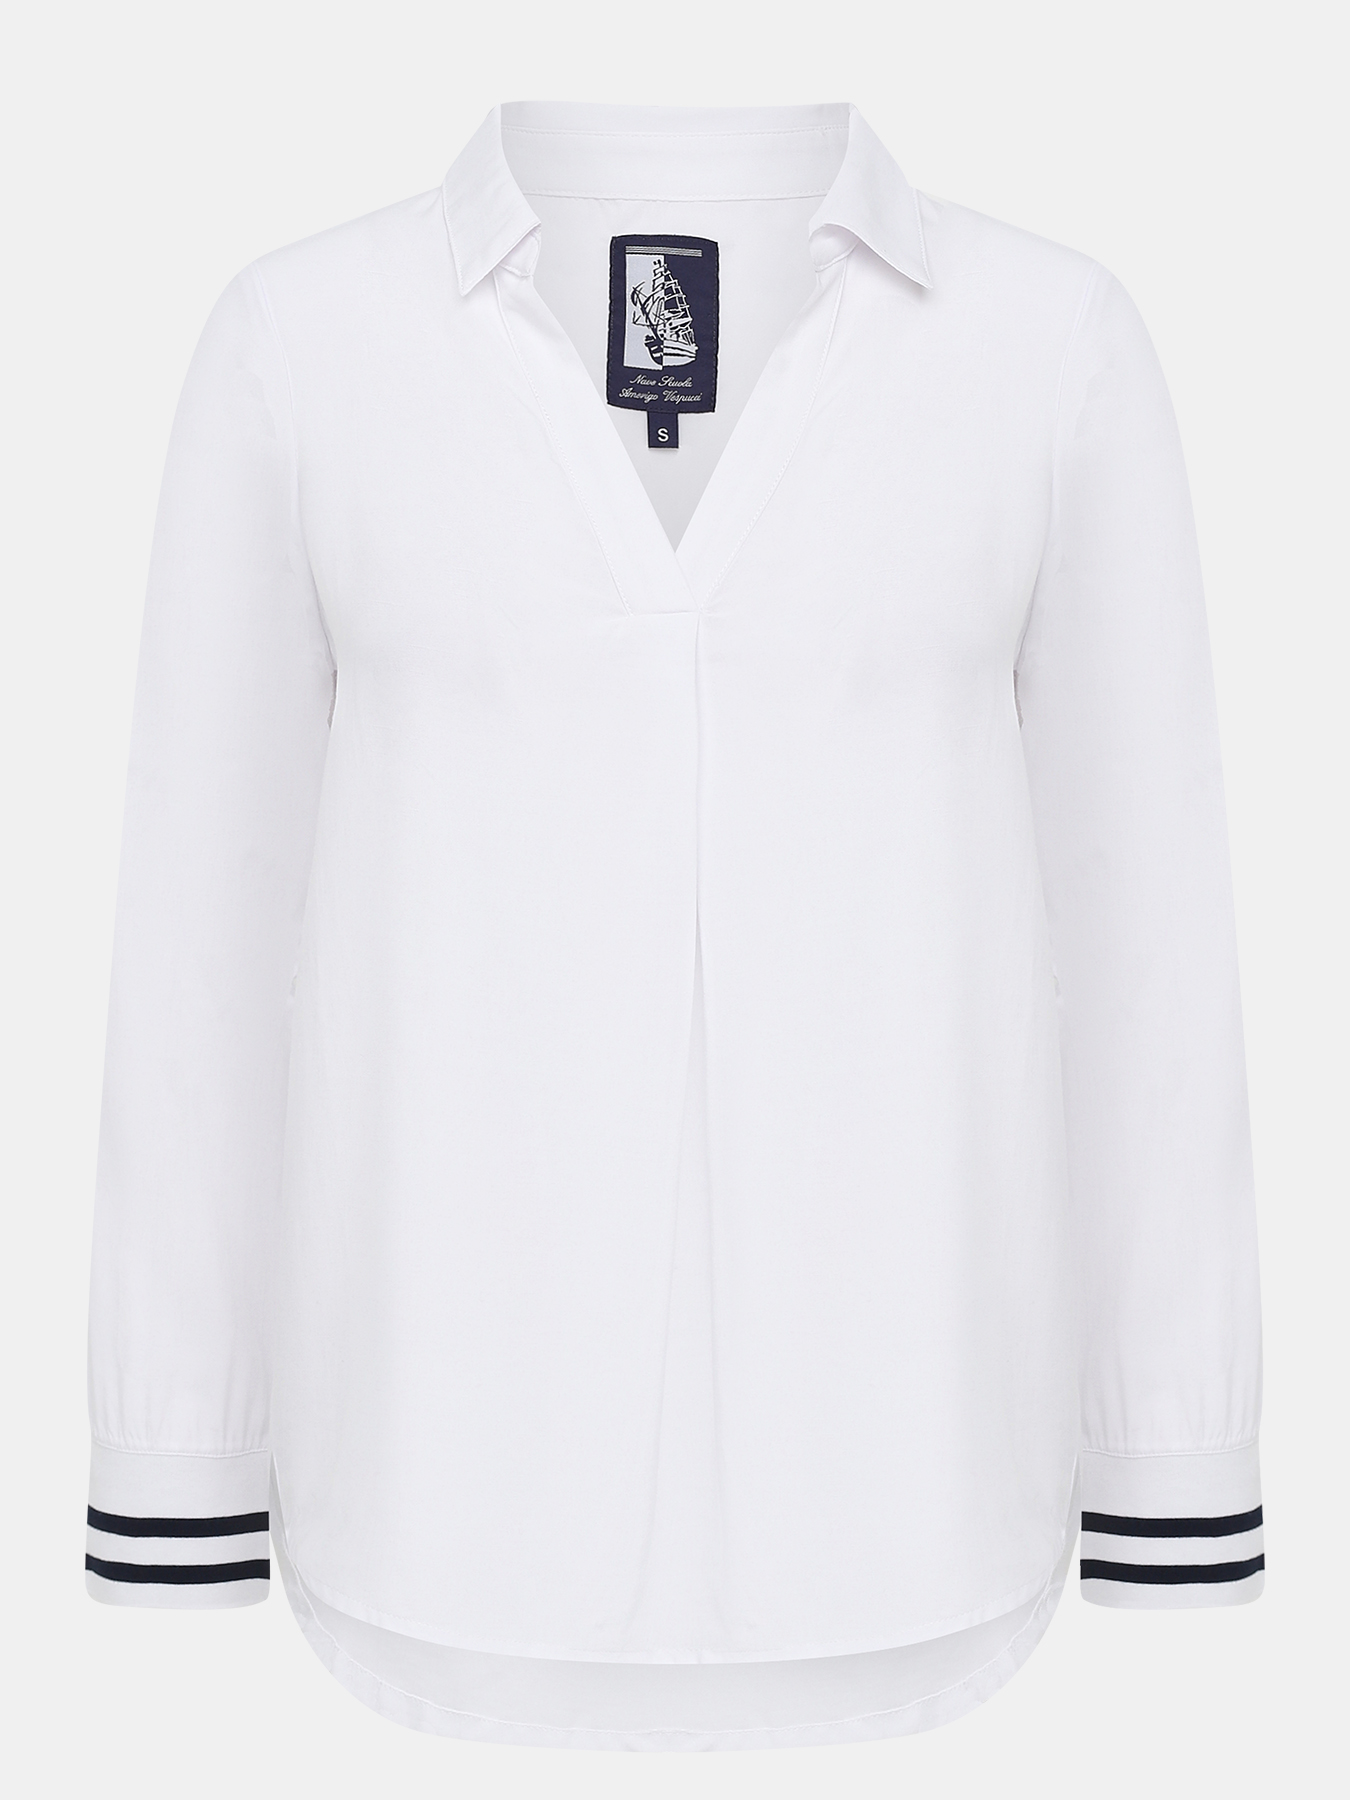 Блузка Marina Militare 427109-043, цвет белый, размер 44-46